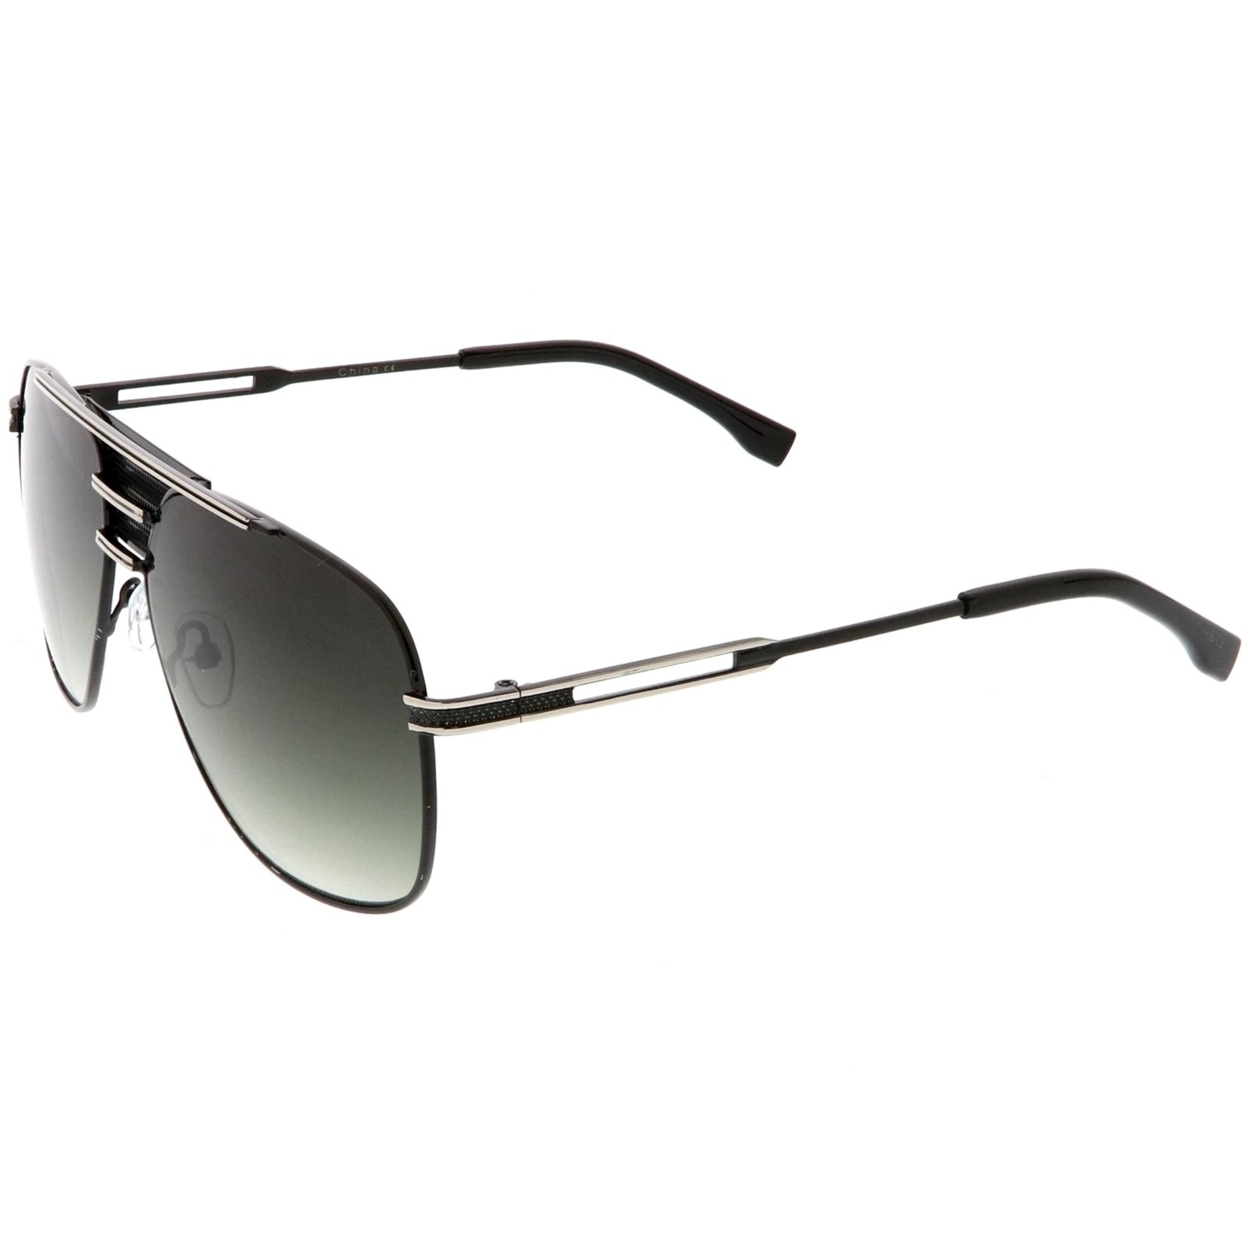 Oversized Aviator Sunglasses Perforated Triple Crossbar Square Lens 60mm - Black Gold / Lavender